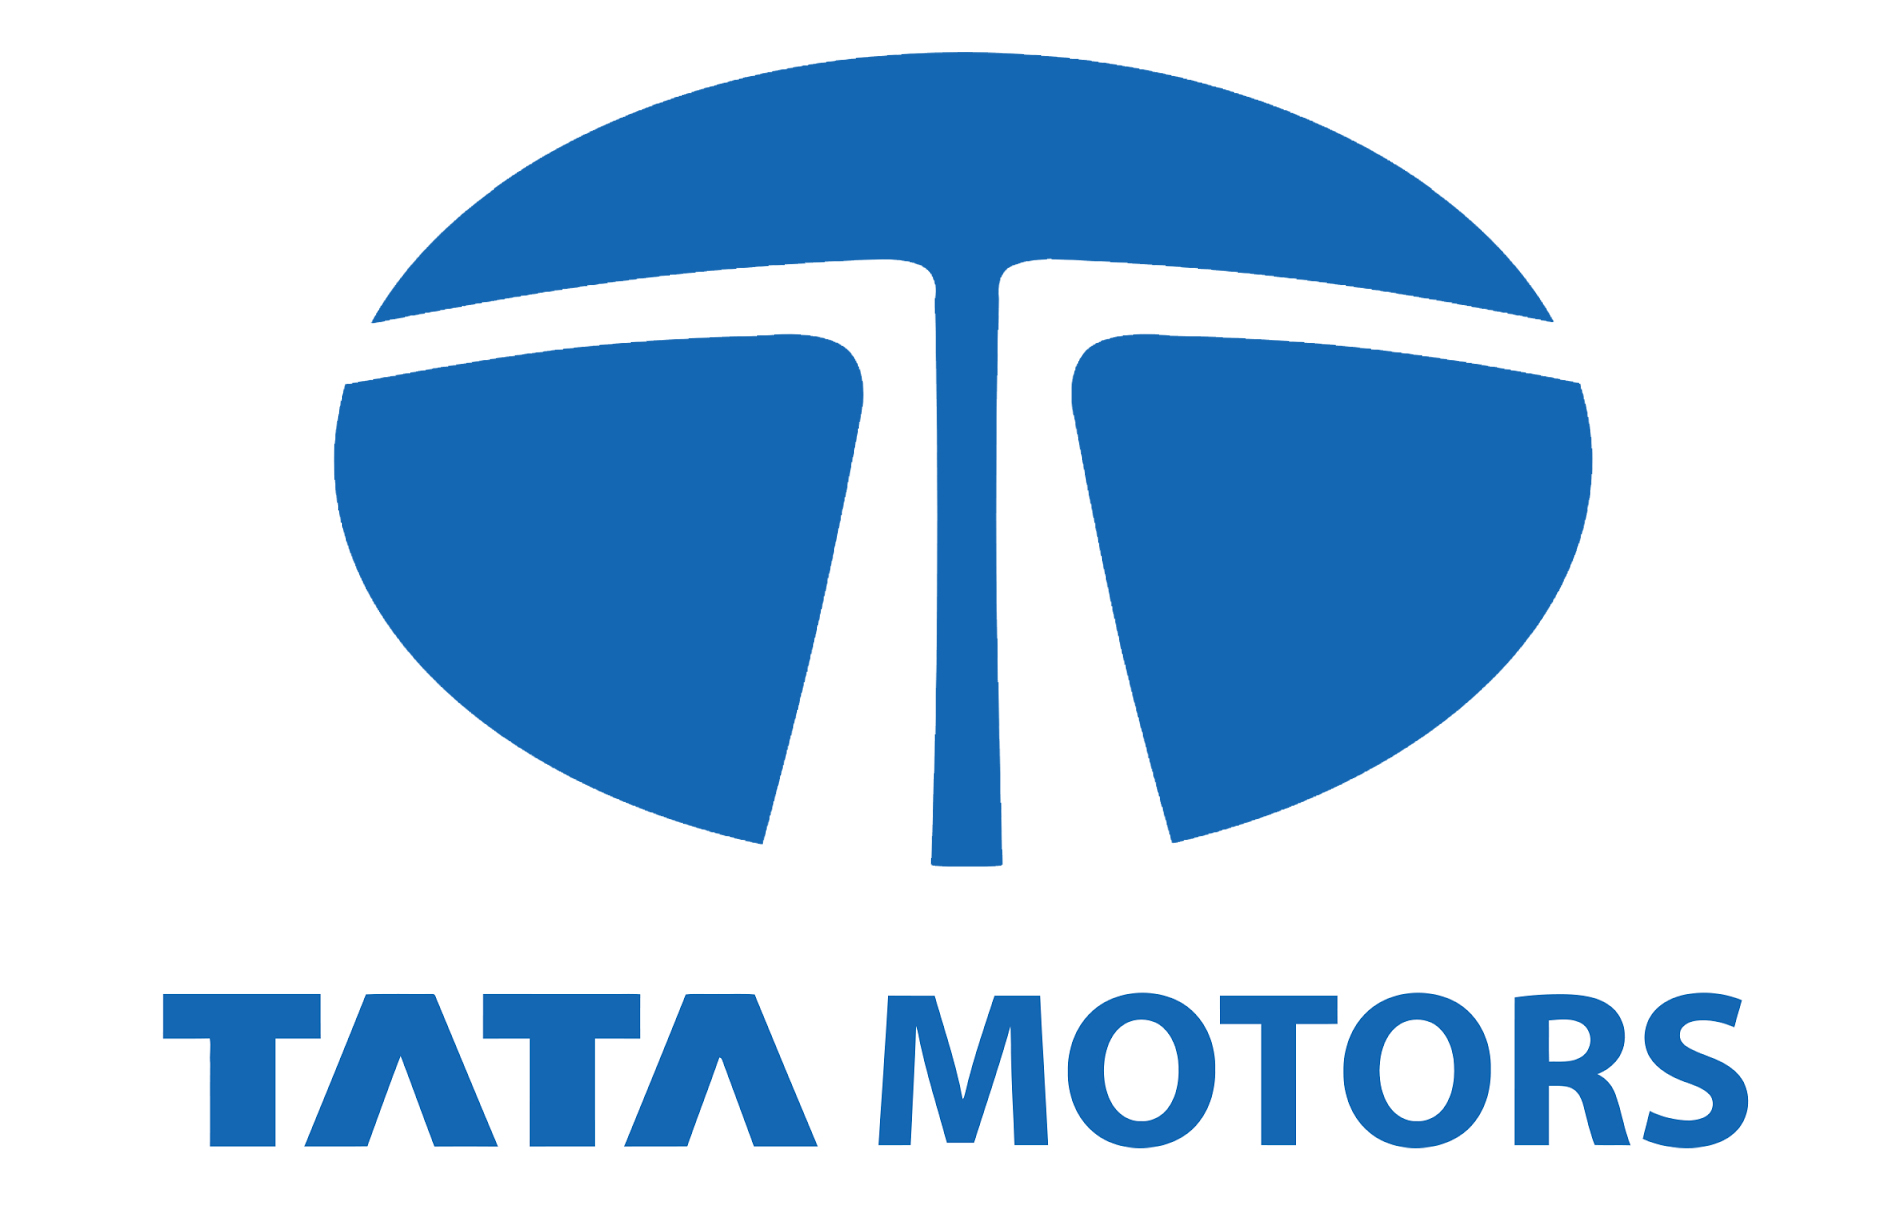 Tata Motors Cars Showroom - Max Motors Logo